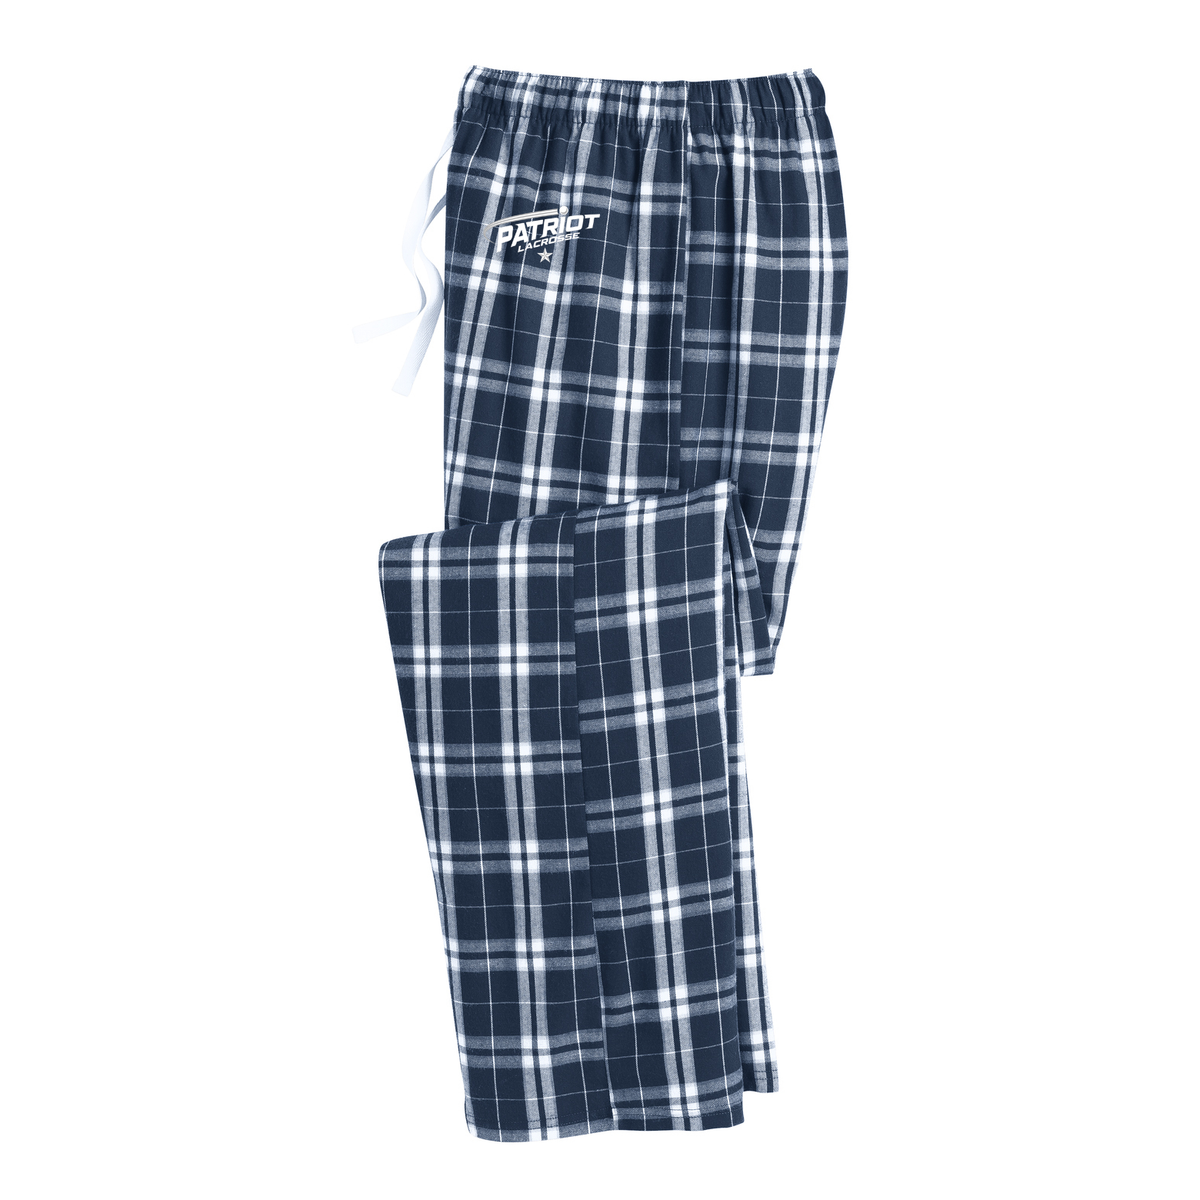 Patriot Lacrosse Plaid Pajama Pants